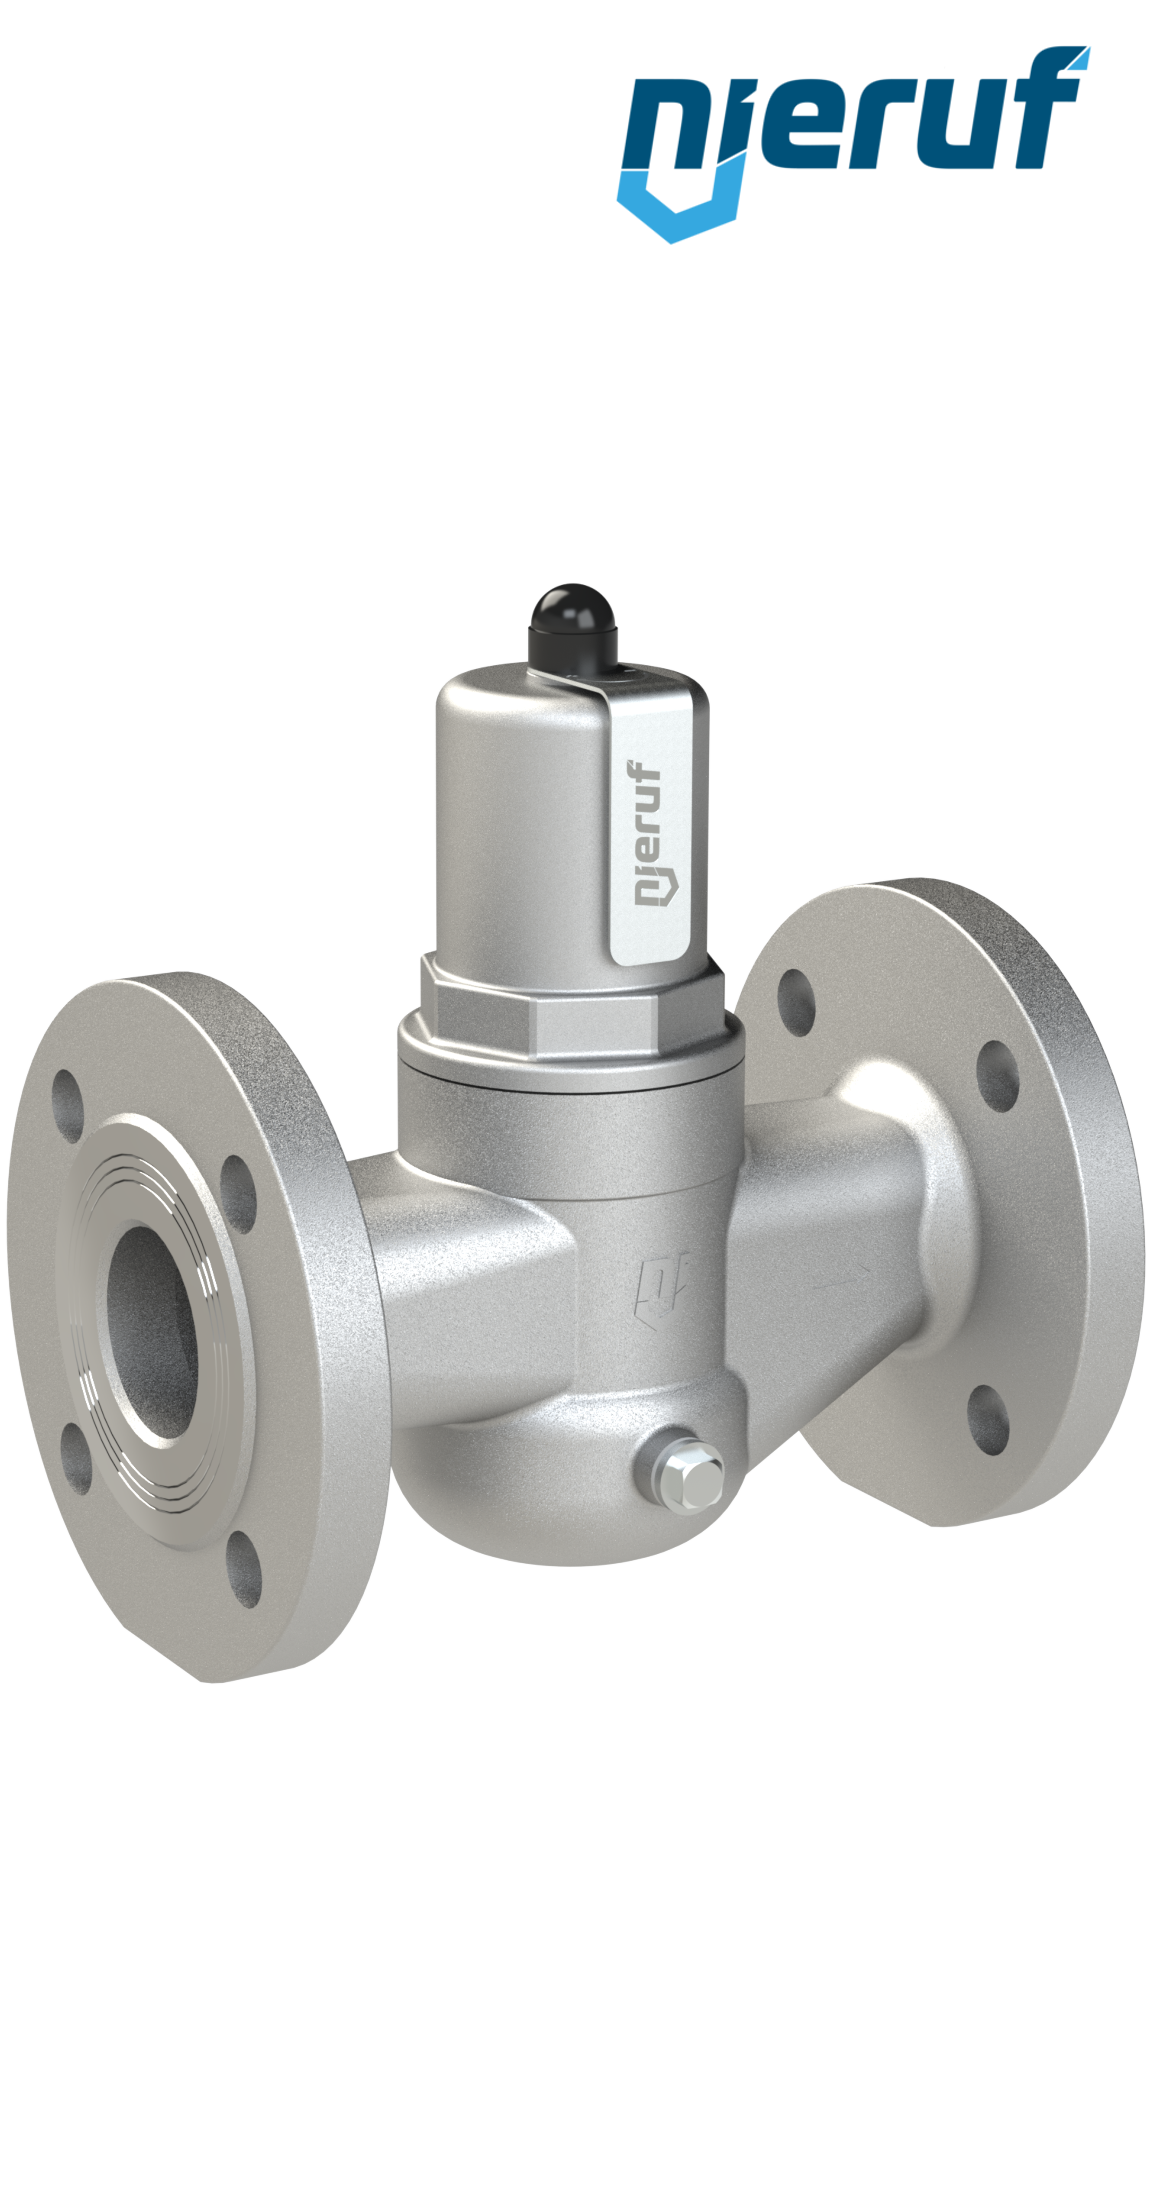 Flange-pressure reducing valve DN 15 PN40 DM07 stainless steel EPDM 1.0 - 8.0 bar